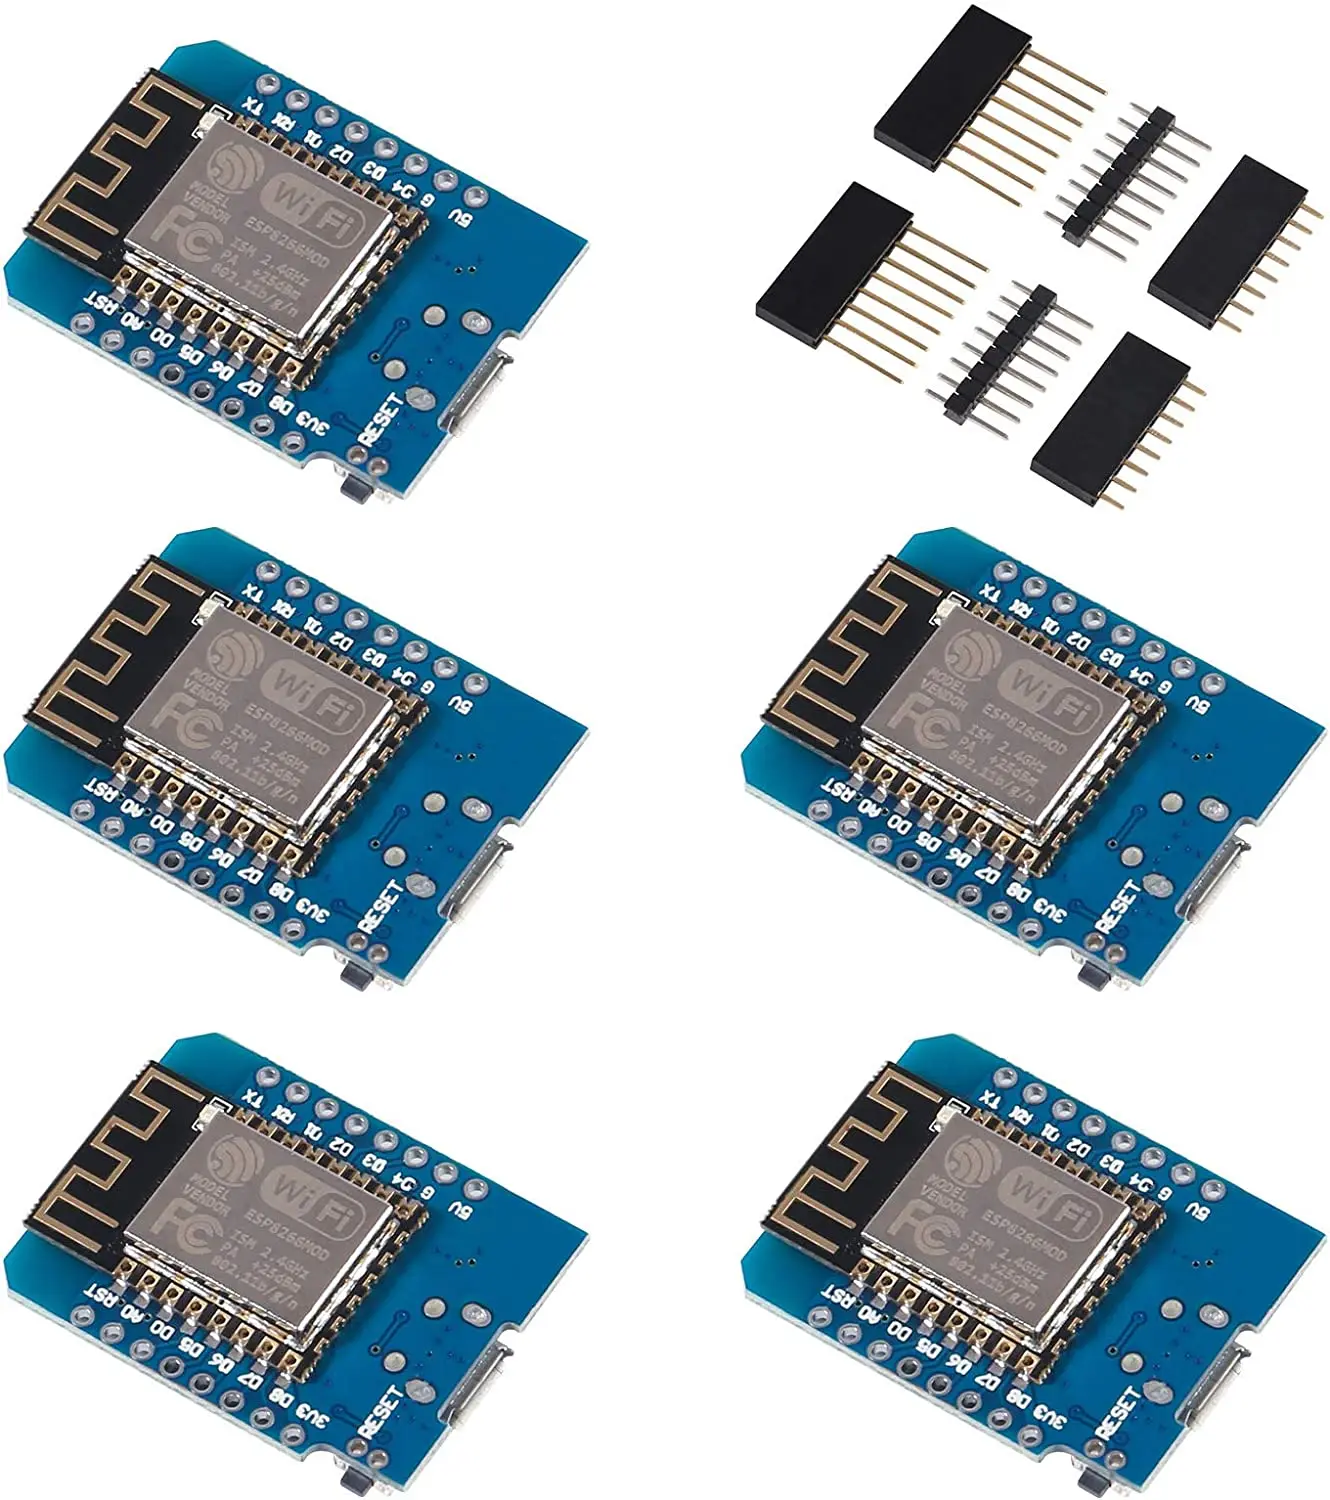 

5pcs ESP8266 ESP-12F D1 Mini 4MByte NodeMcu Lua WLAN WiFi Internet Development Board for Arduino Compatible with WeMos D1 Mini